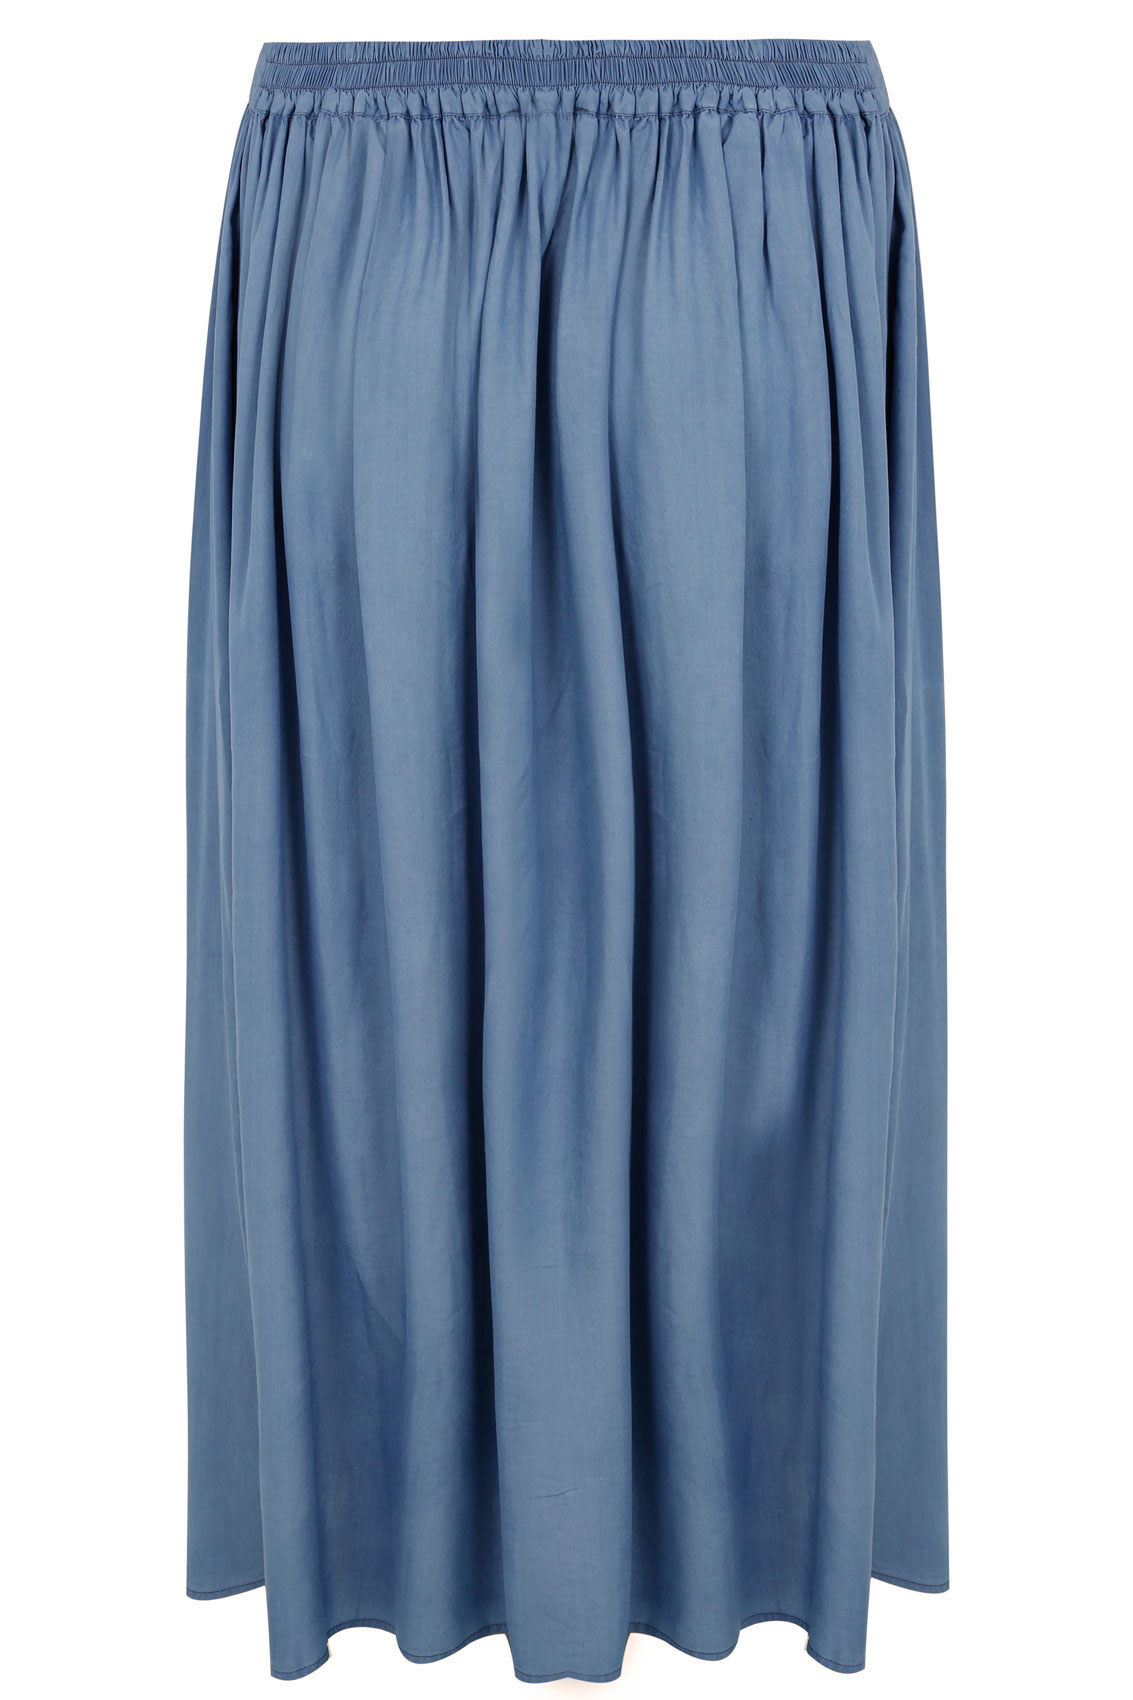 YOURS LONDON Denim Blue Tencel Maxi Skirt Plus Size 16 to 32